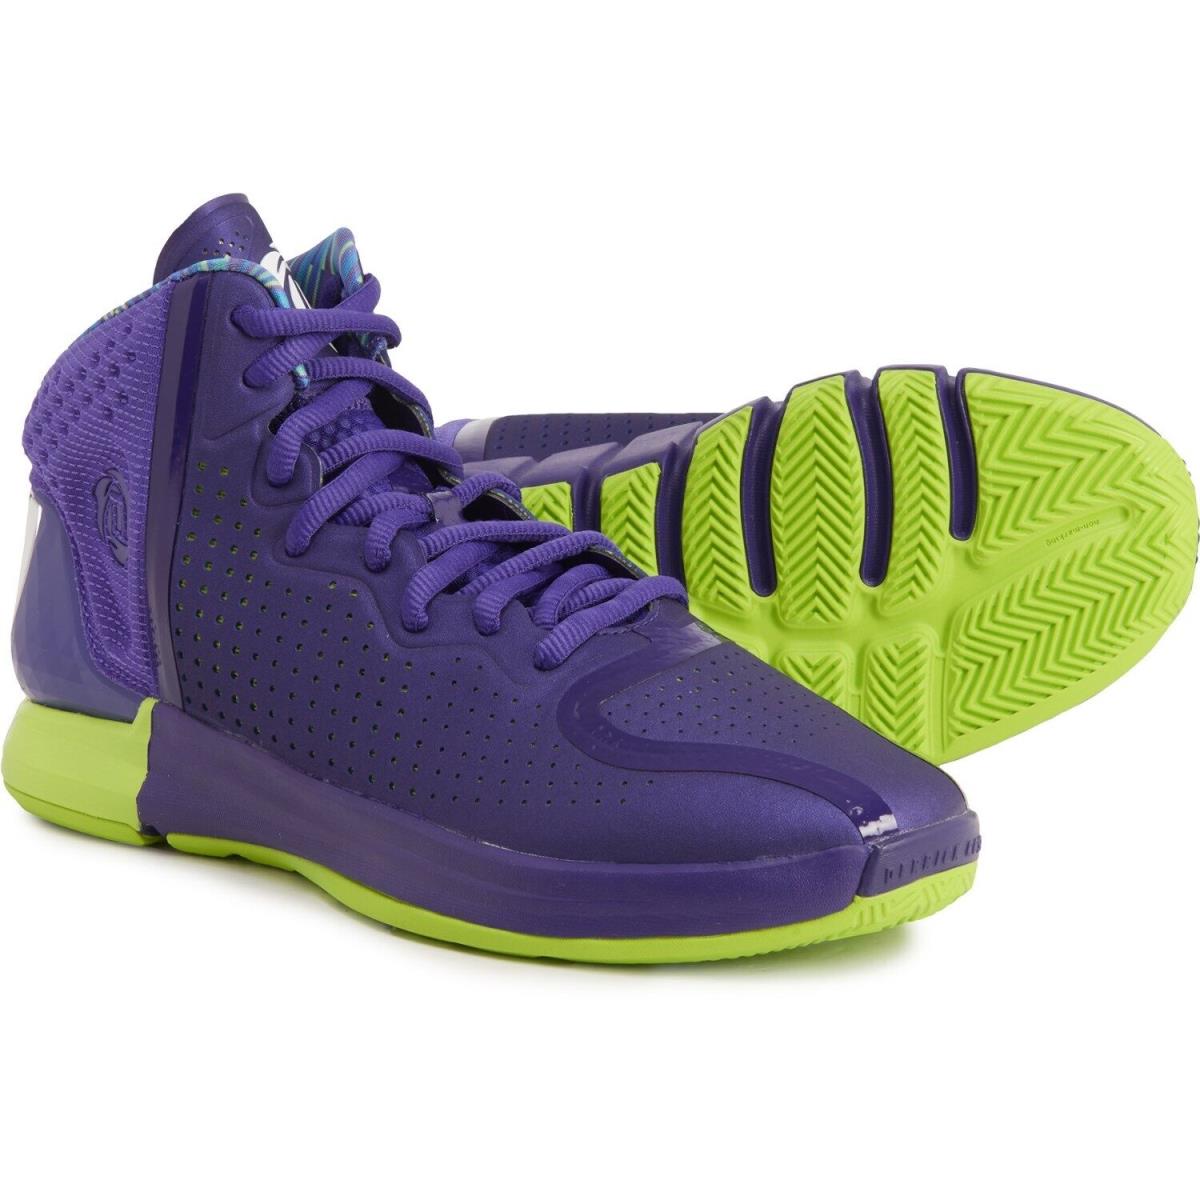 Adidas D Rose 4 Restomod Basketball Shoes For Men Size 14.5